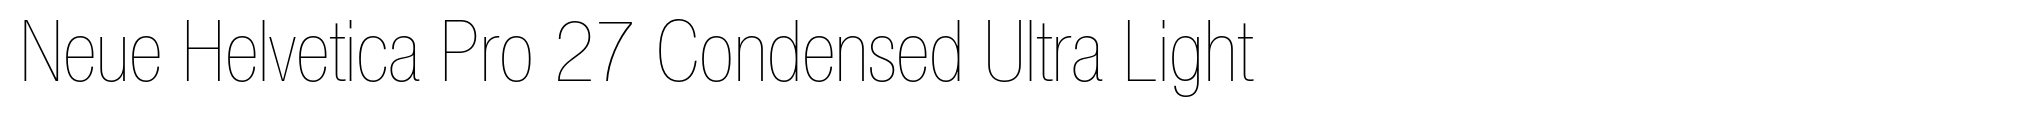 Neue Helvetica Pro 27 Condensed Ultra Light image